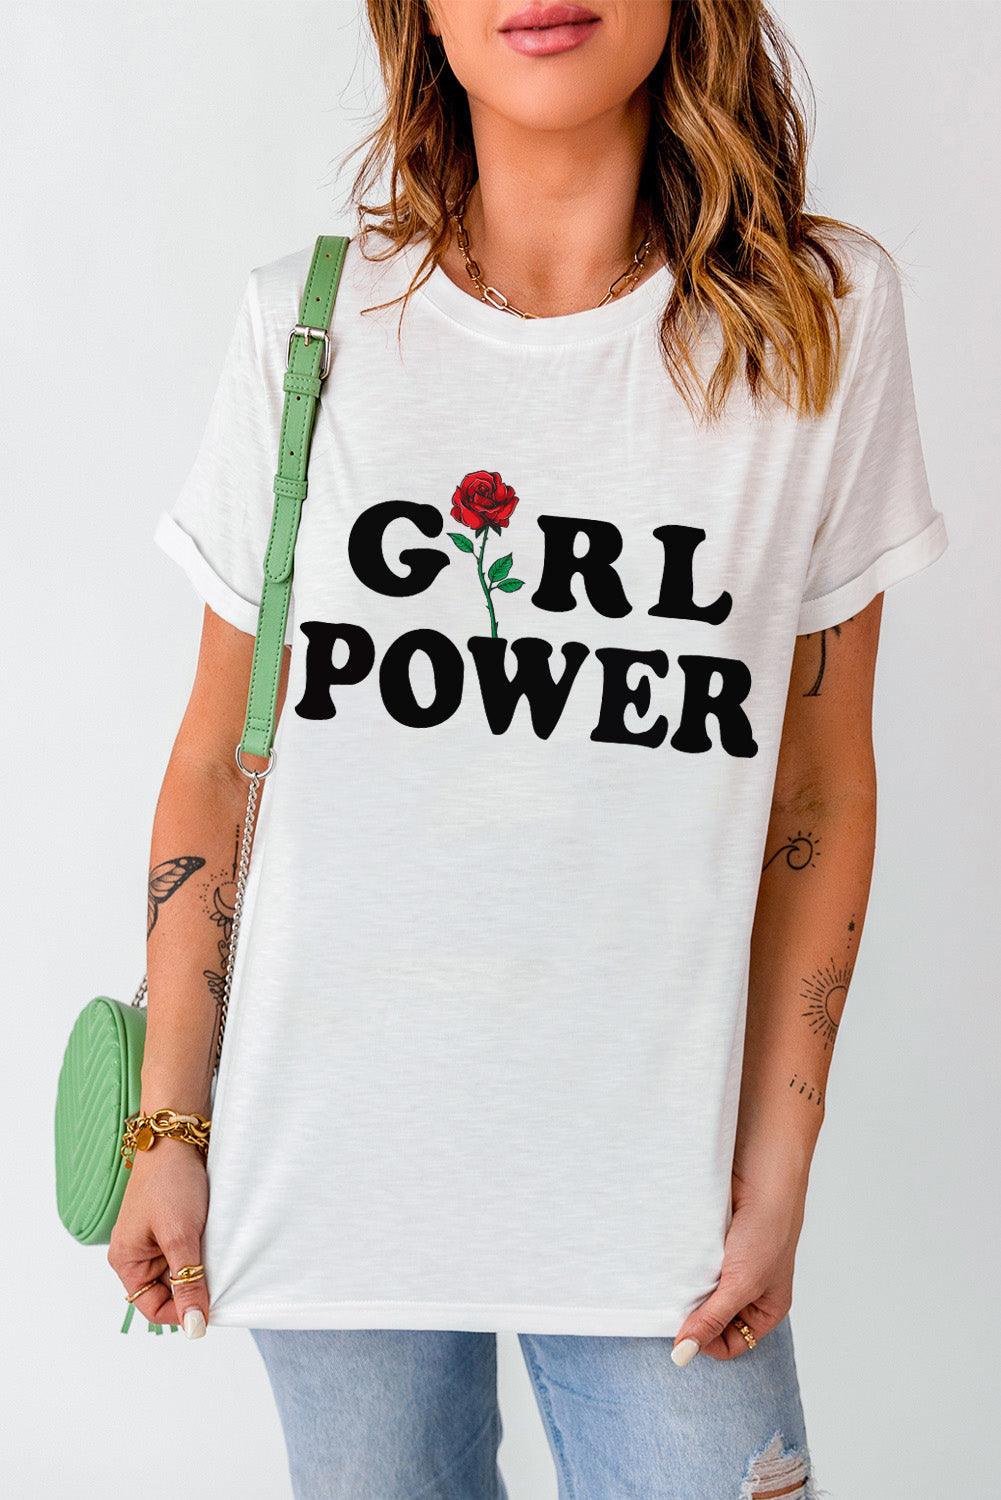 GIRL POWER Rose Graphic Tee Shirt - BELLATRENDZ